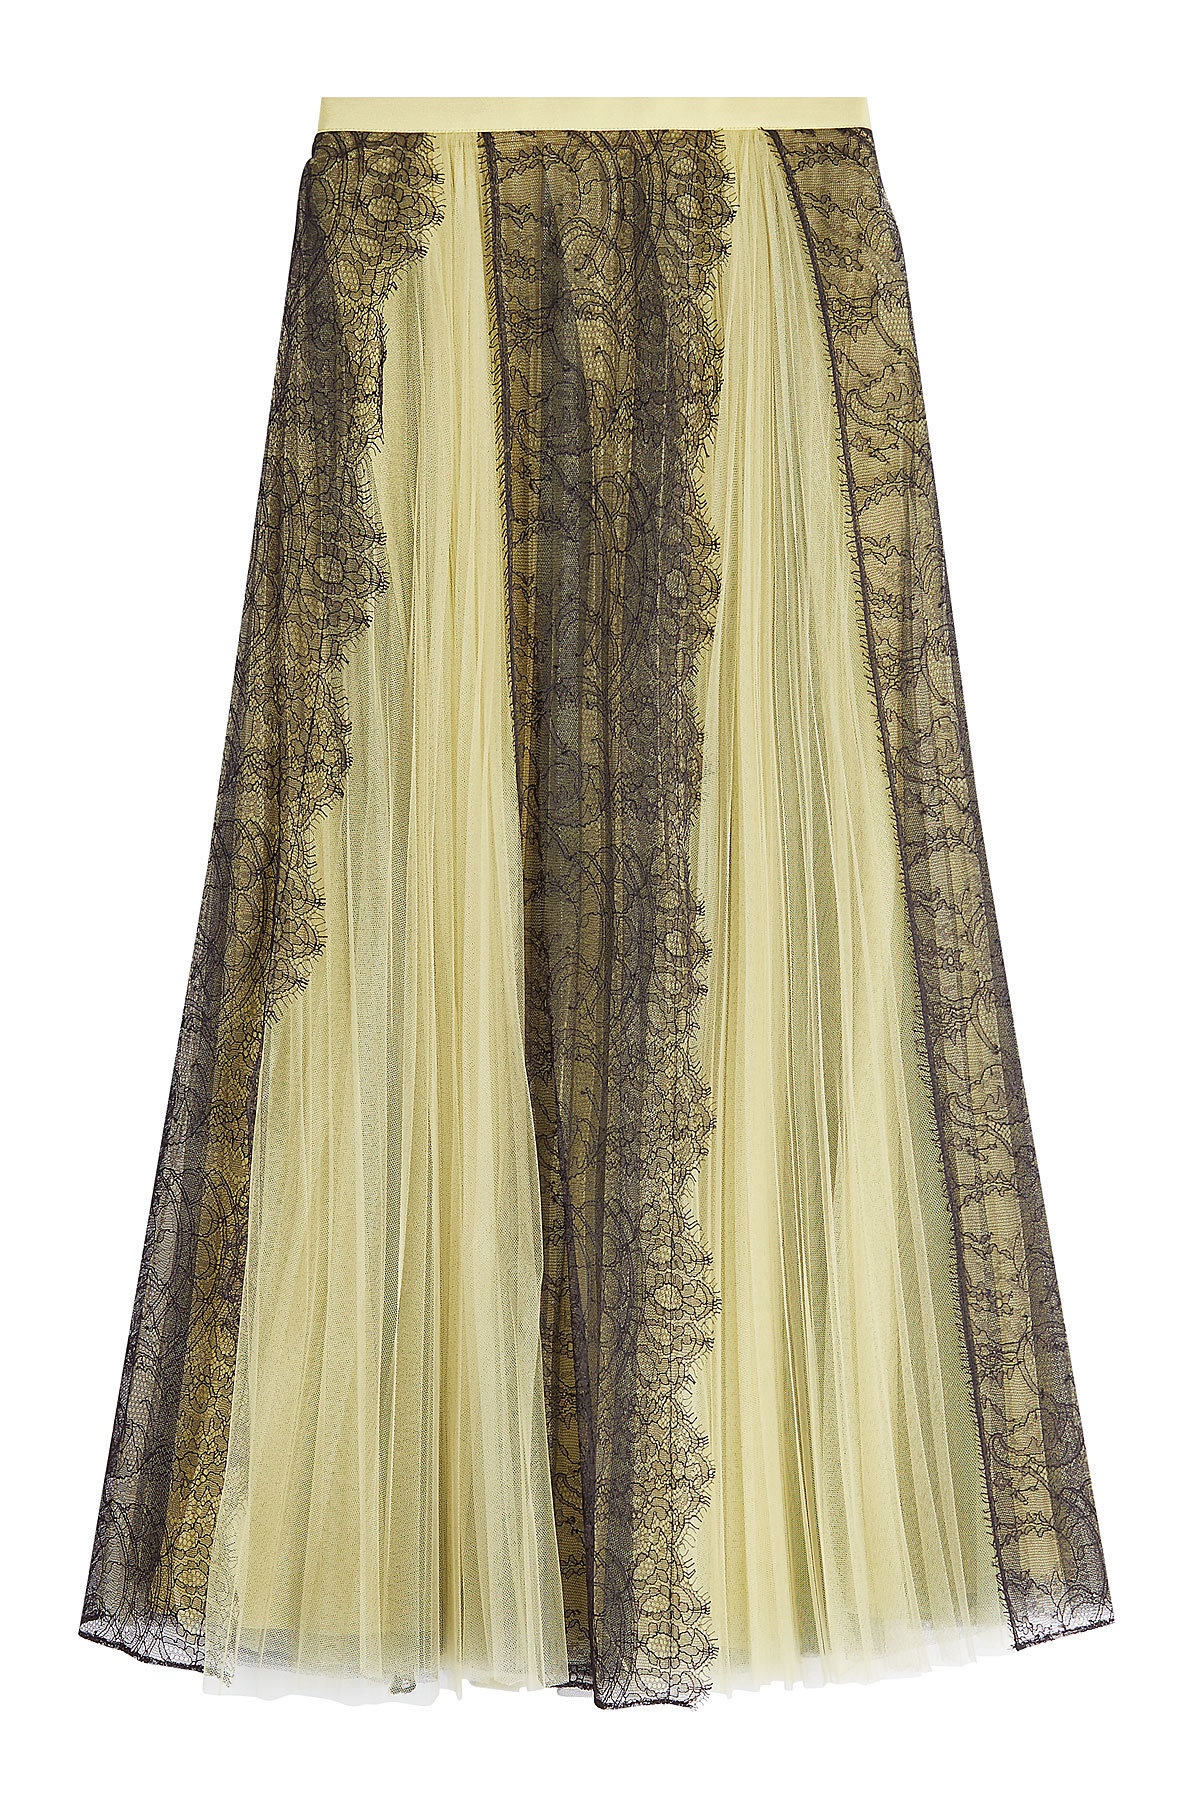 Burberry - Silk Chiffon Skirt with Lace